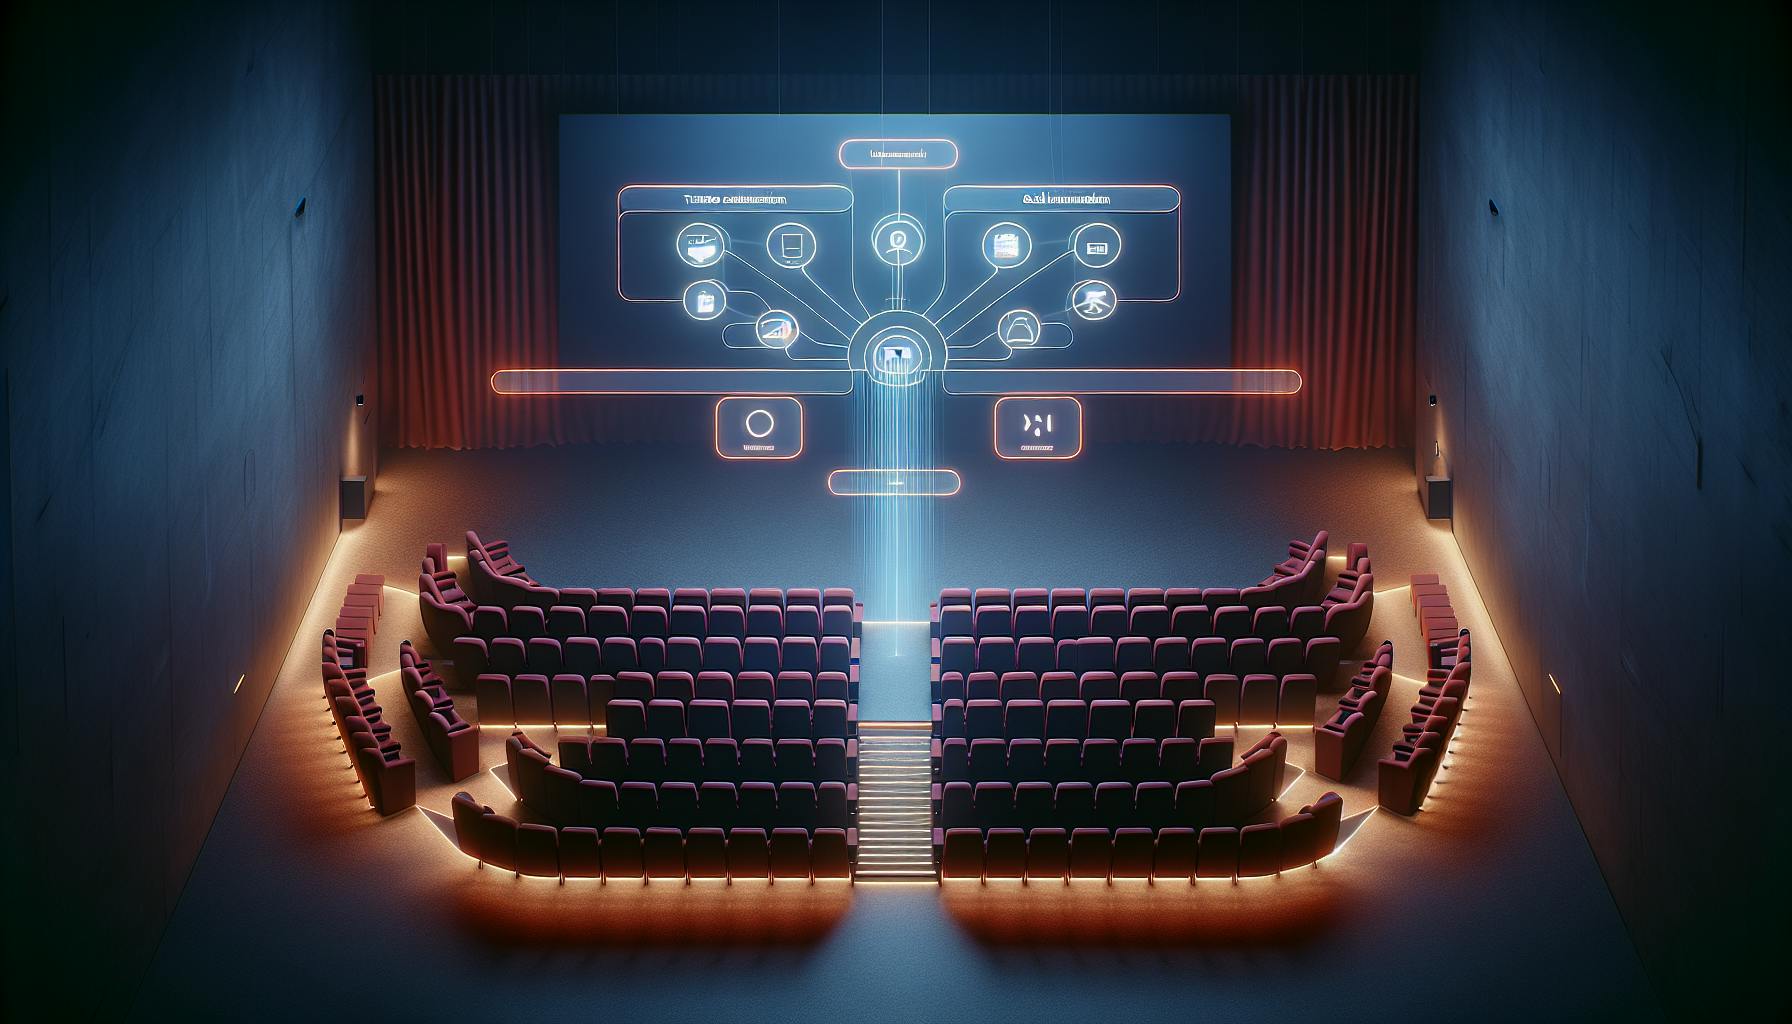 Theatre Management System: Enhancing Moviegoer Engagement